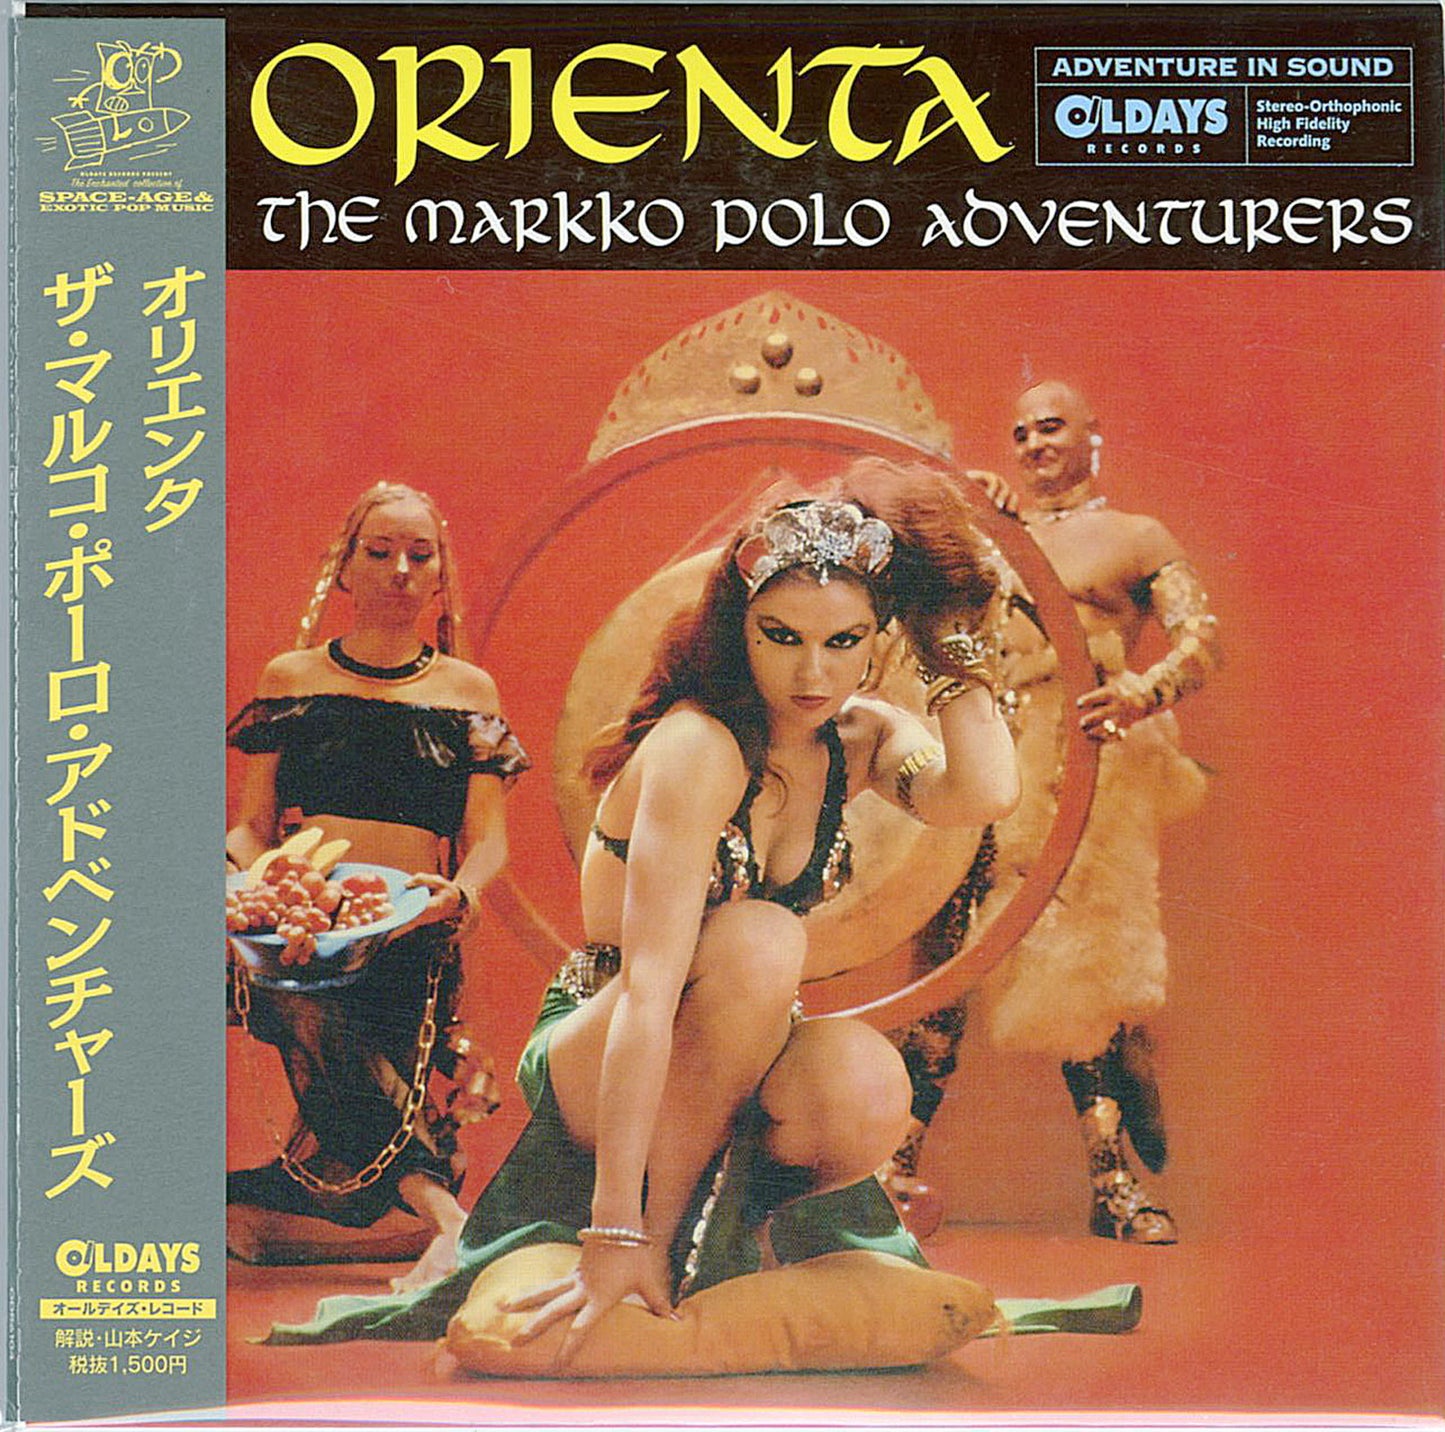 The Markko Polo Adventureres - Orienta - Japan  Mini LP CD Bonus Track